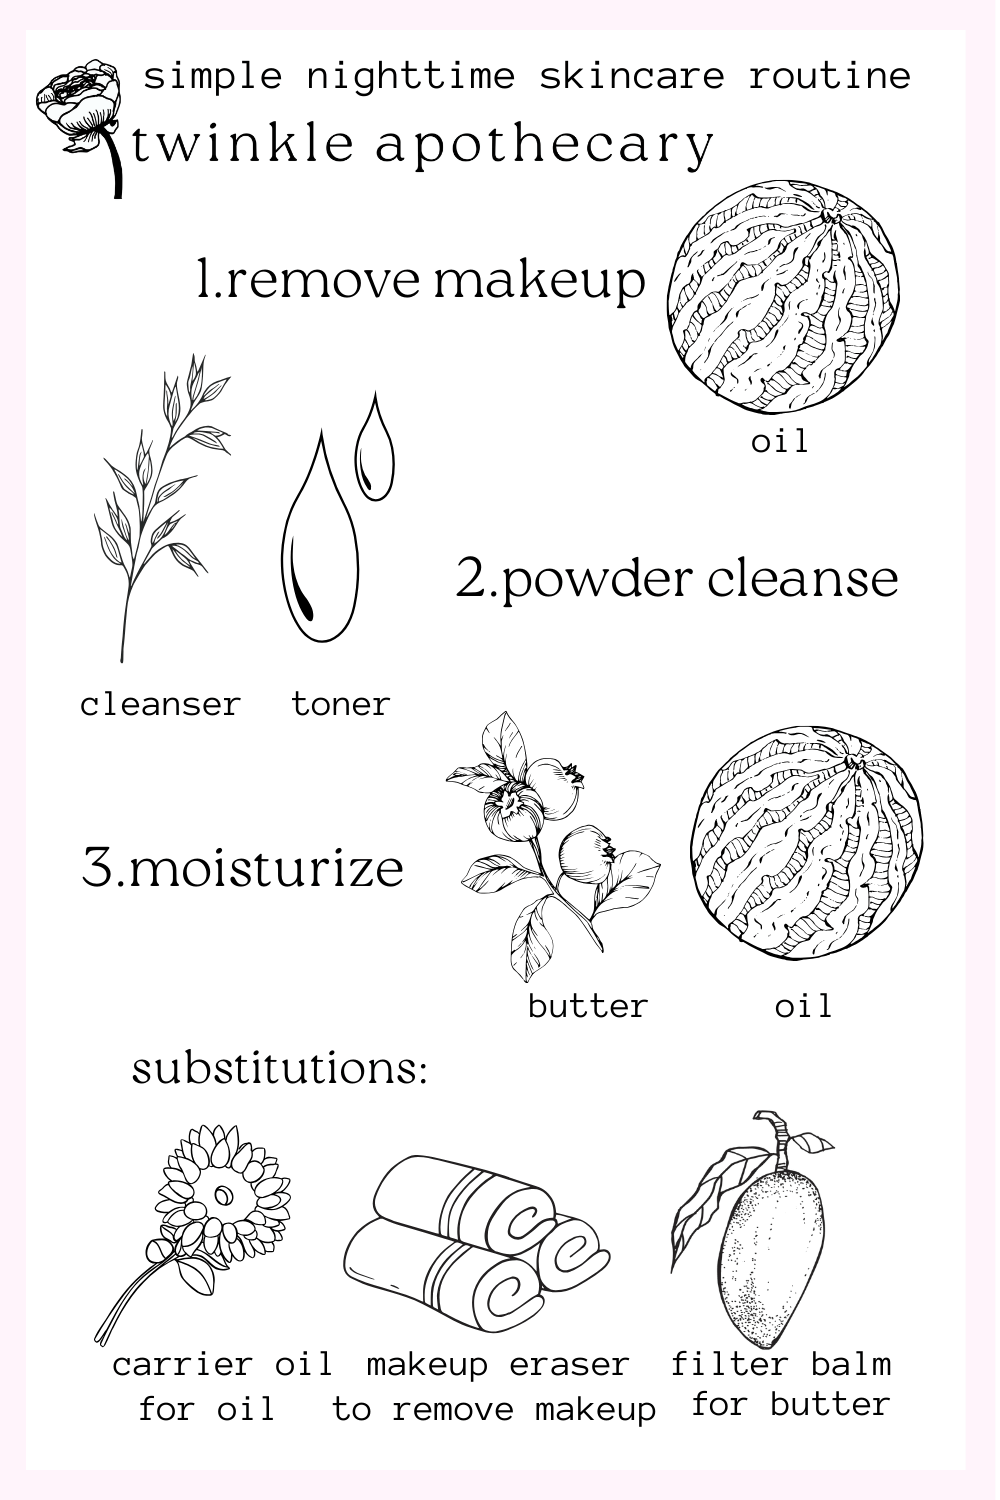 Cleanser: skincare